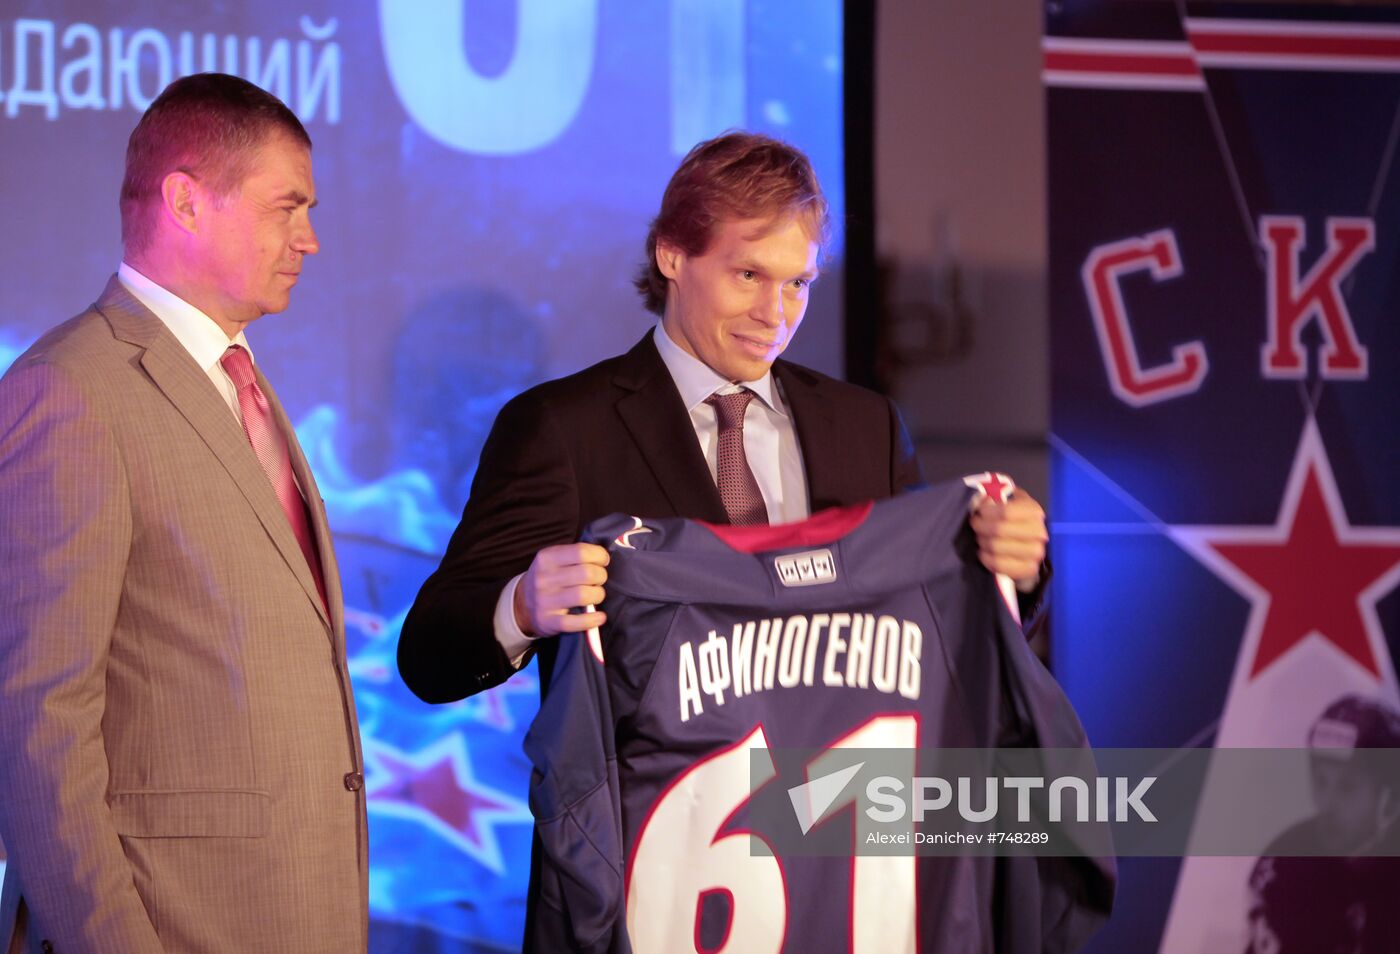 Presentation of ice hockey club SKA, season 2010-2011